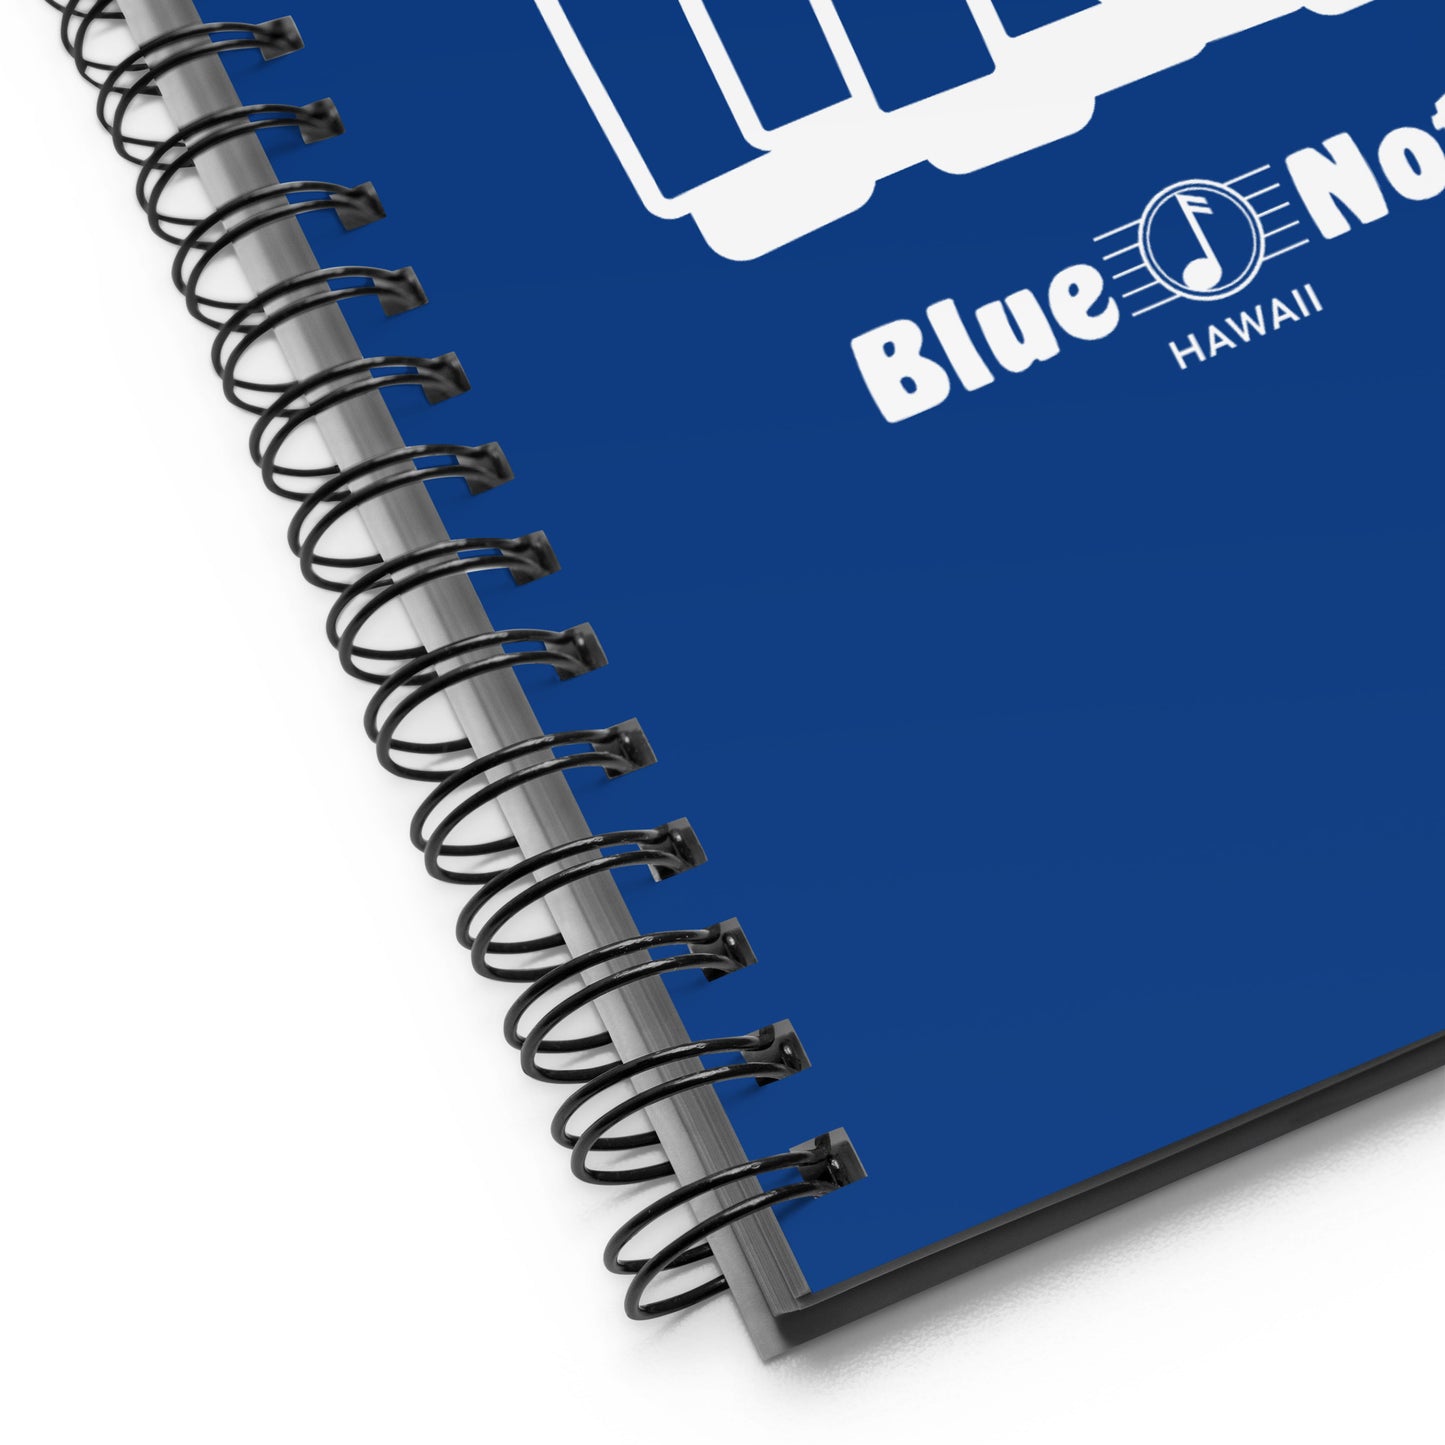 Blue Note Piano Keys Notebook